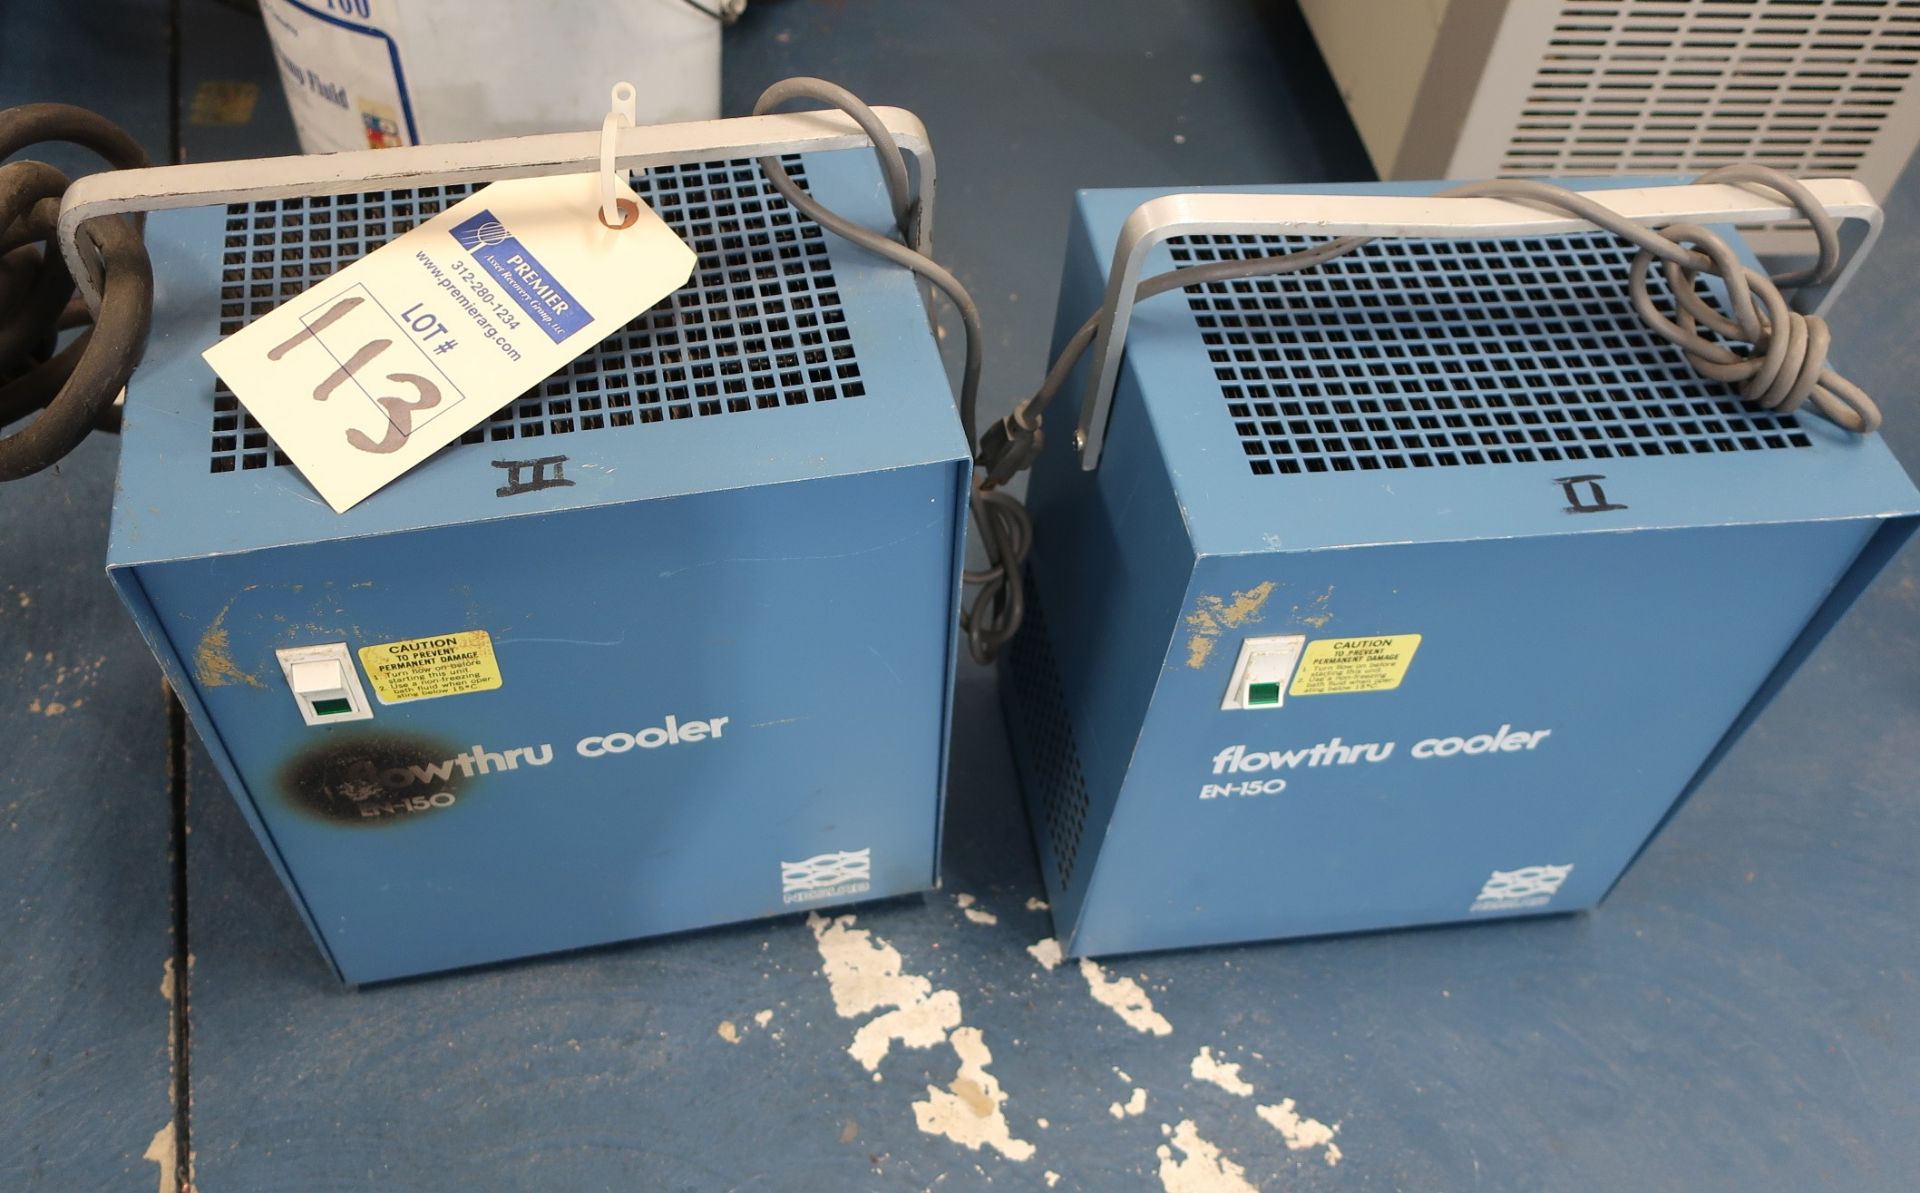 (2) Neslab EN-150 Flowthru Coolers